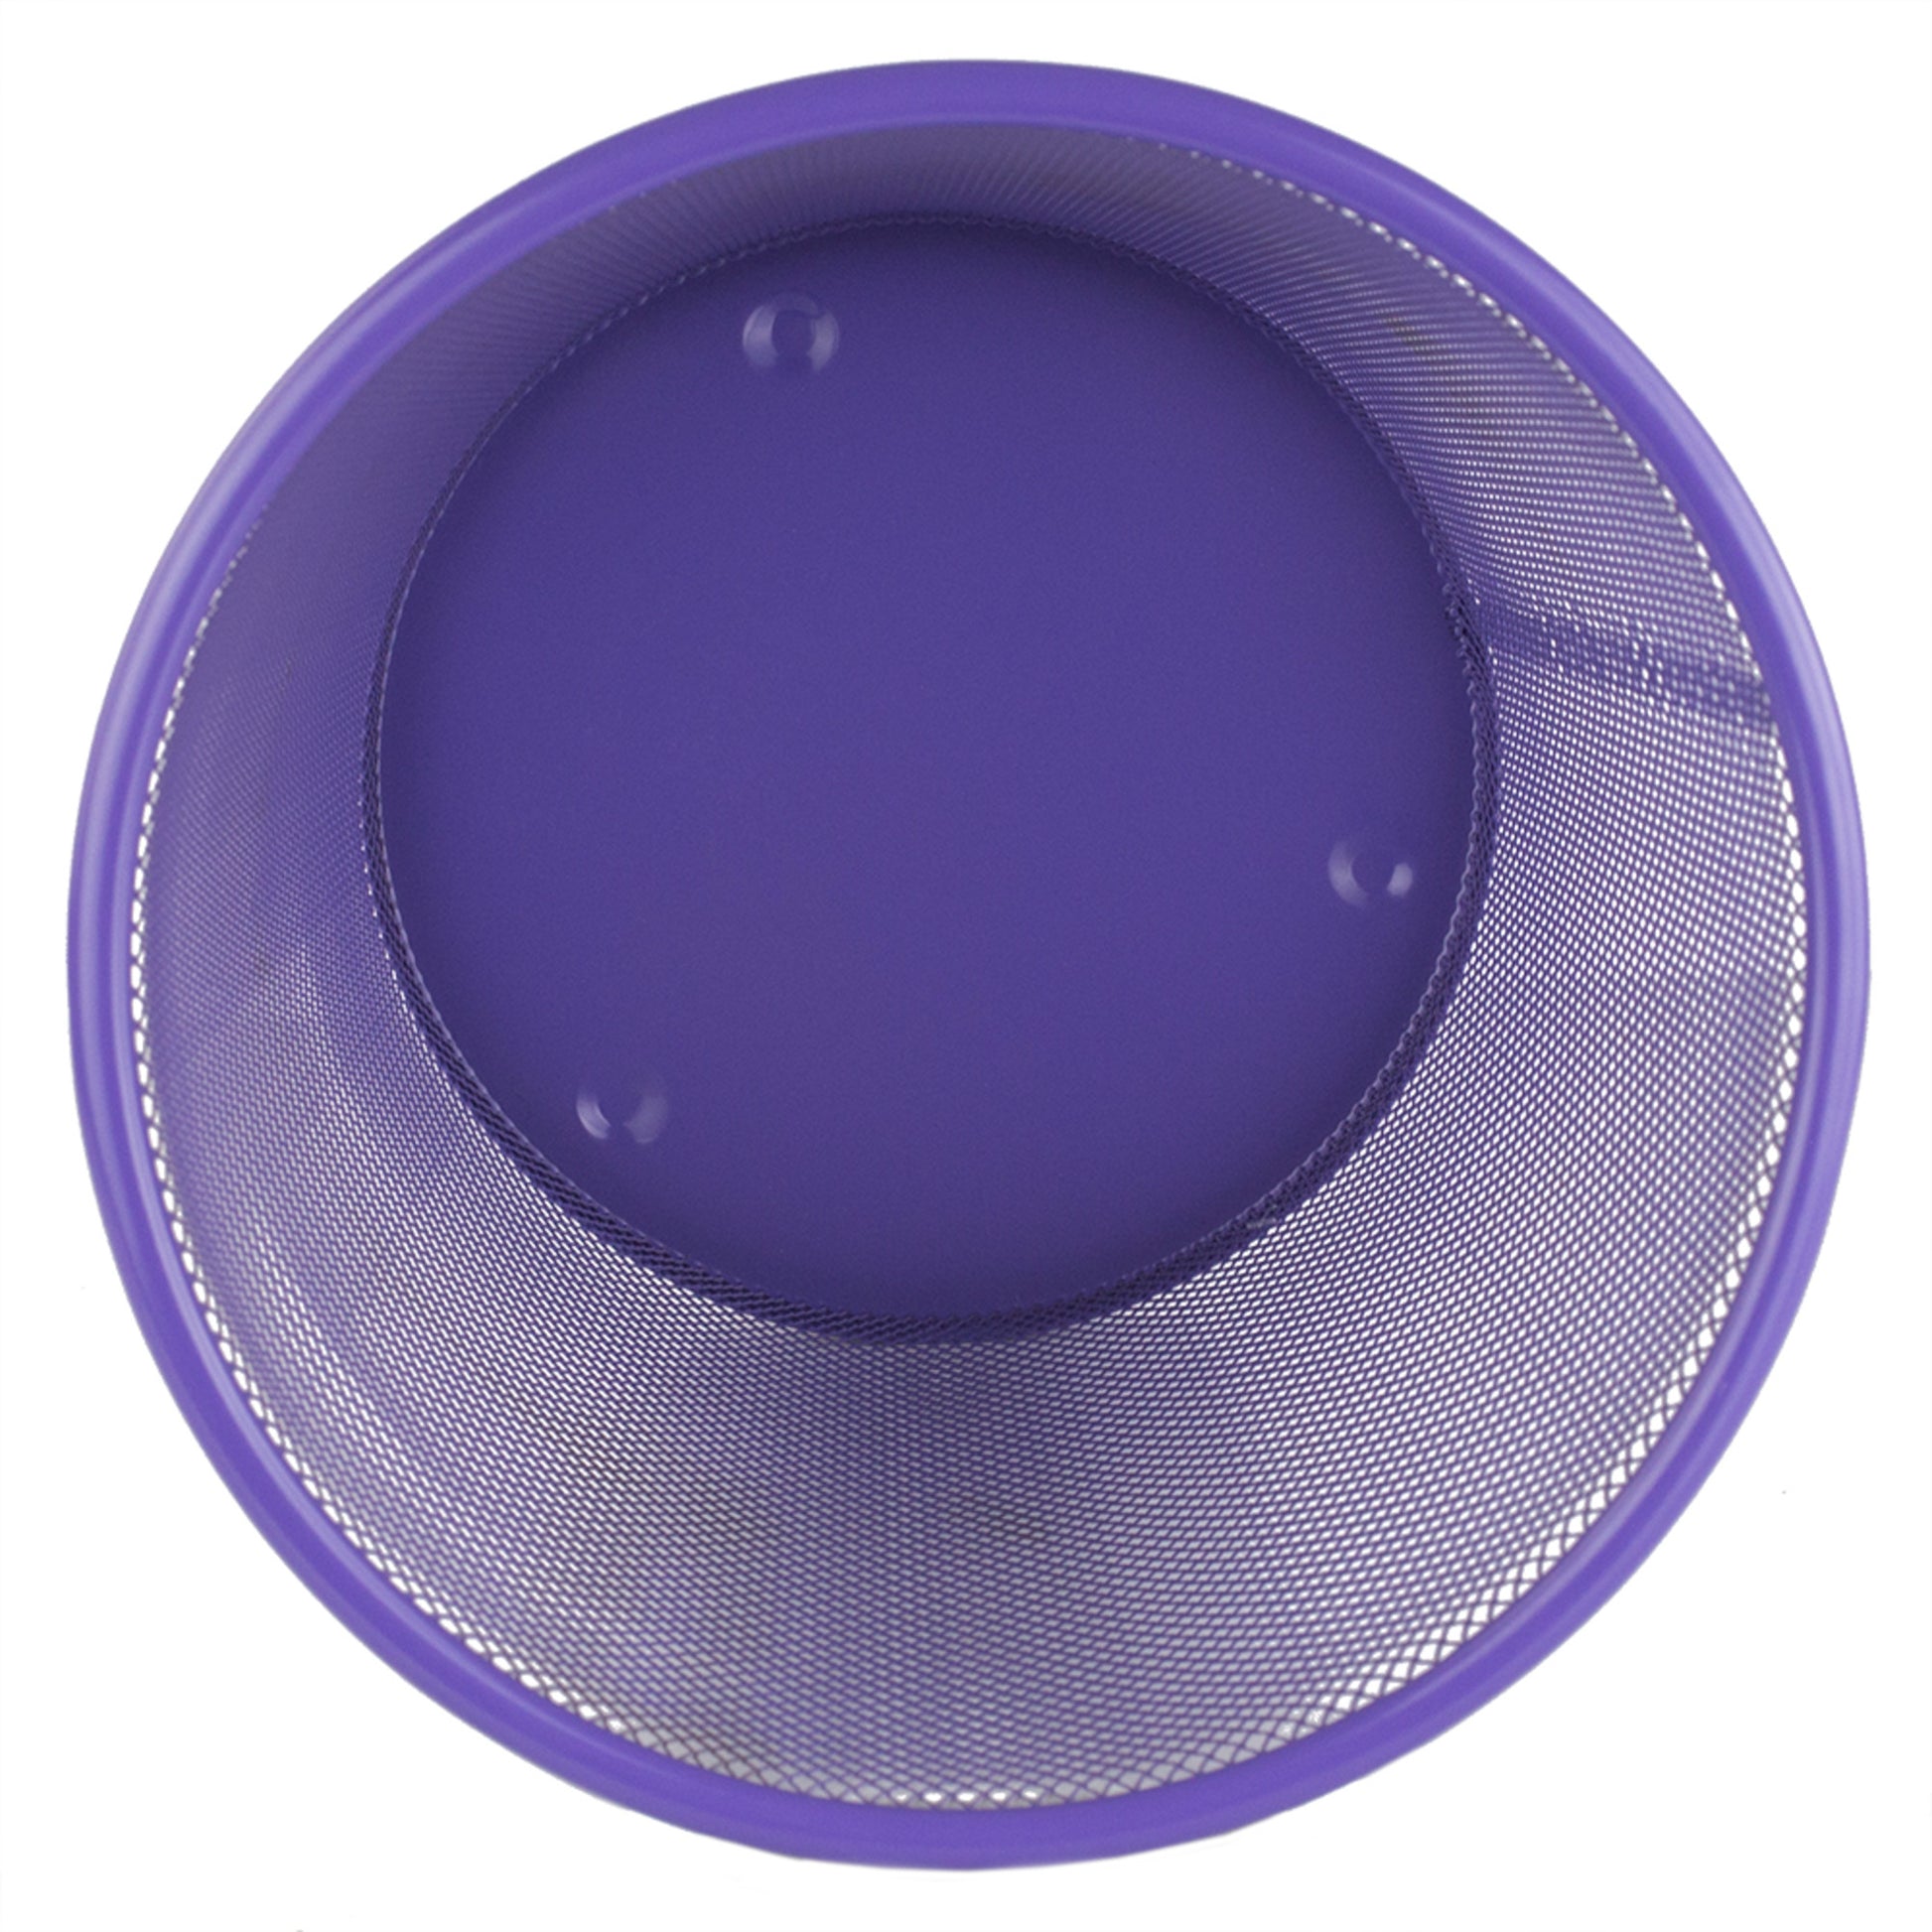 Home Basics Small Mesh Steel Waste Bin, Purple - Purple